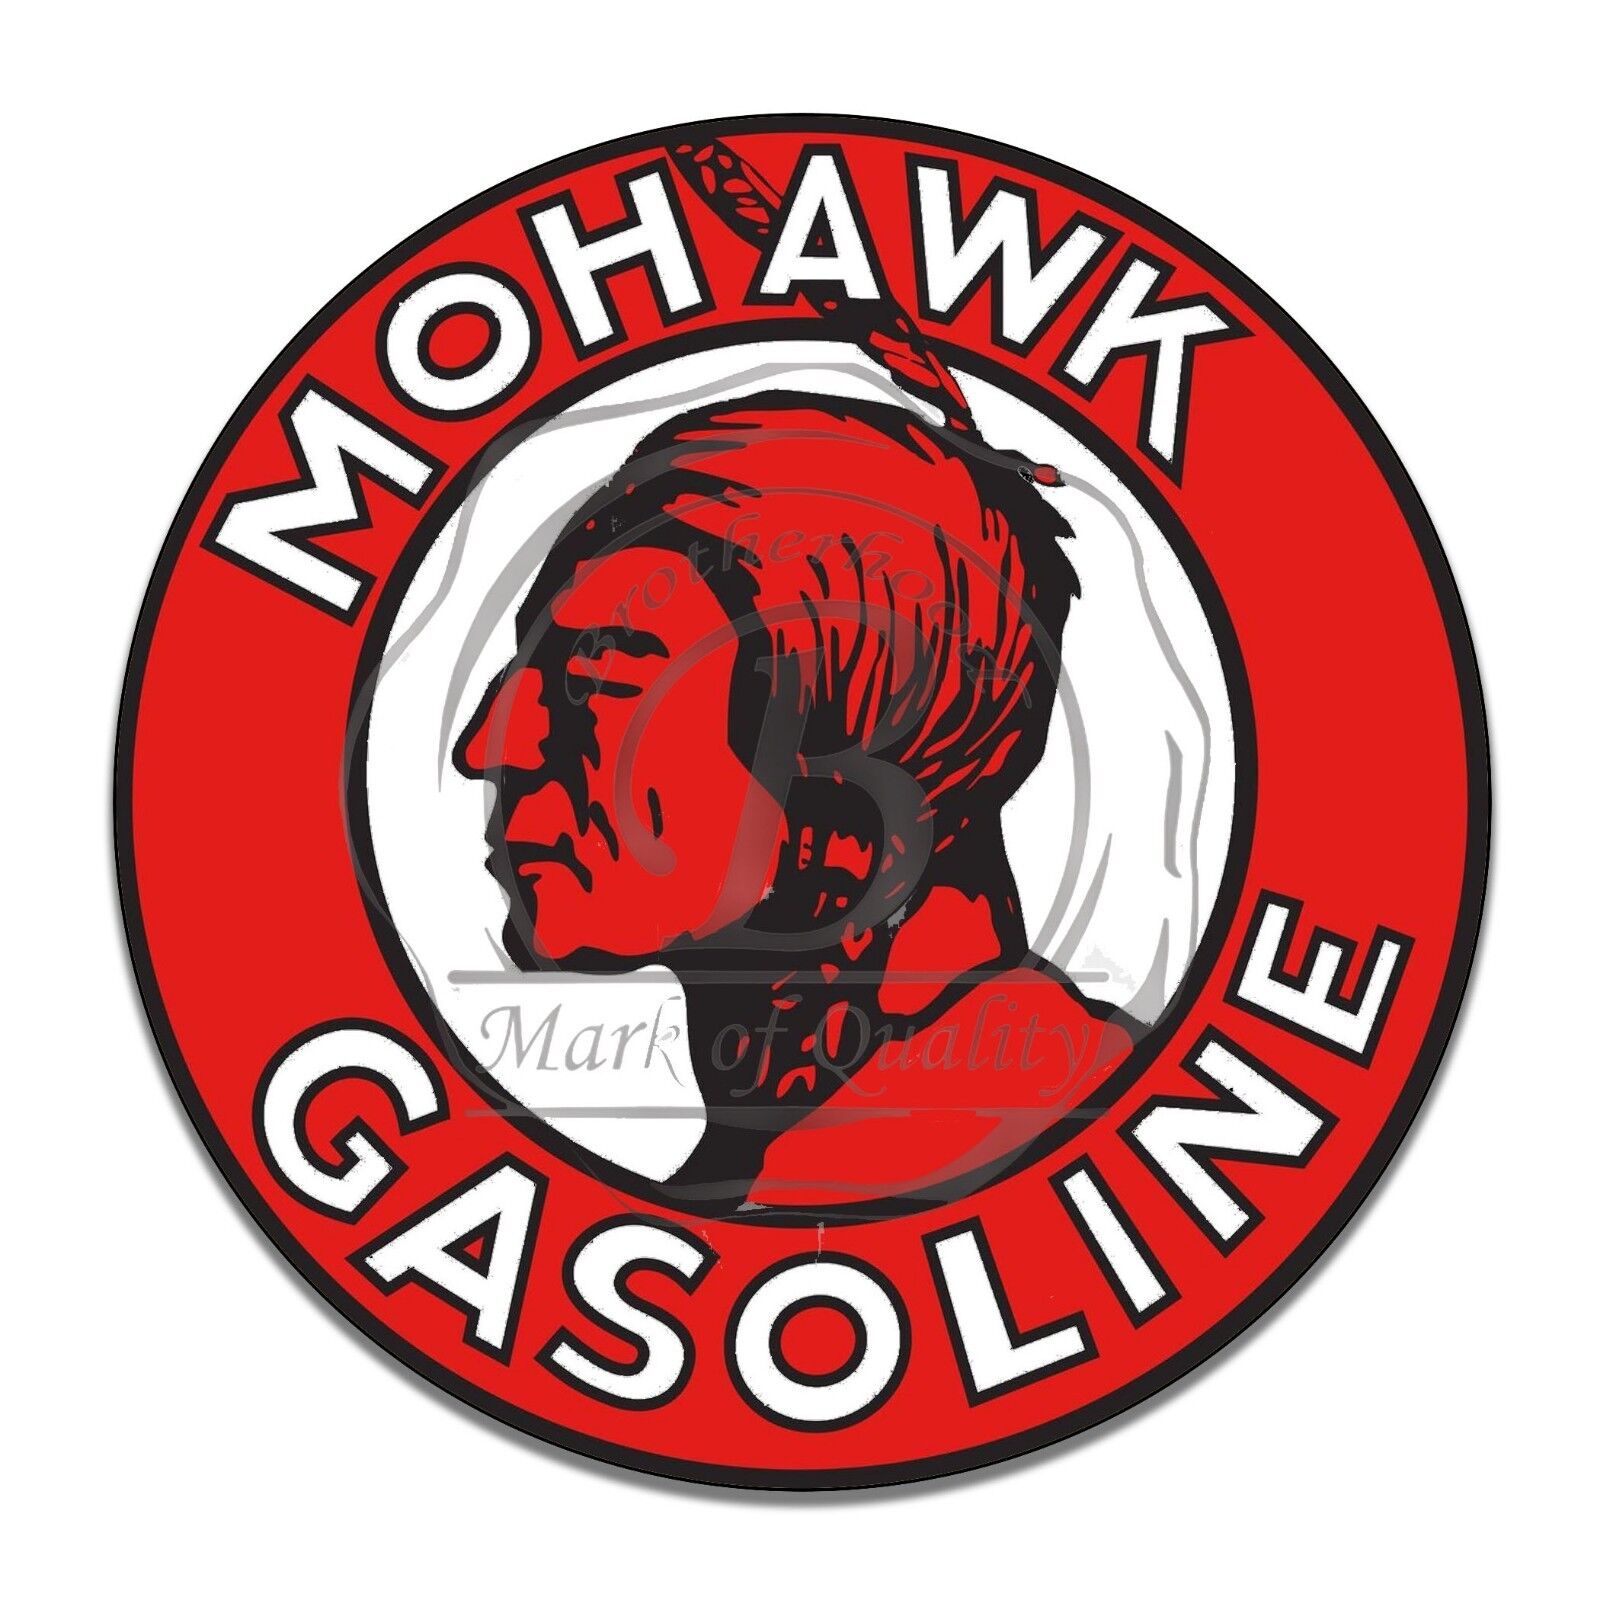 Mohawk Gasoline Indian Head Design Reproduction Circle Aluminum Sign